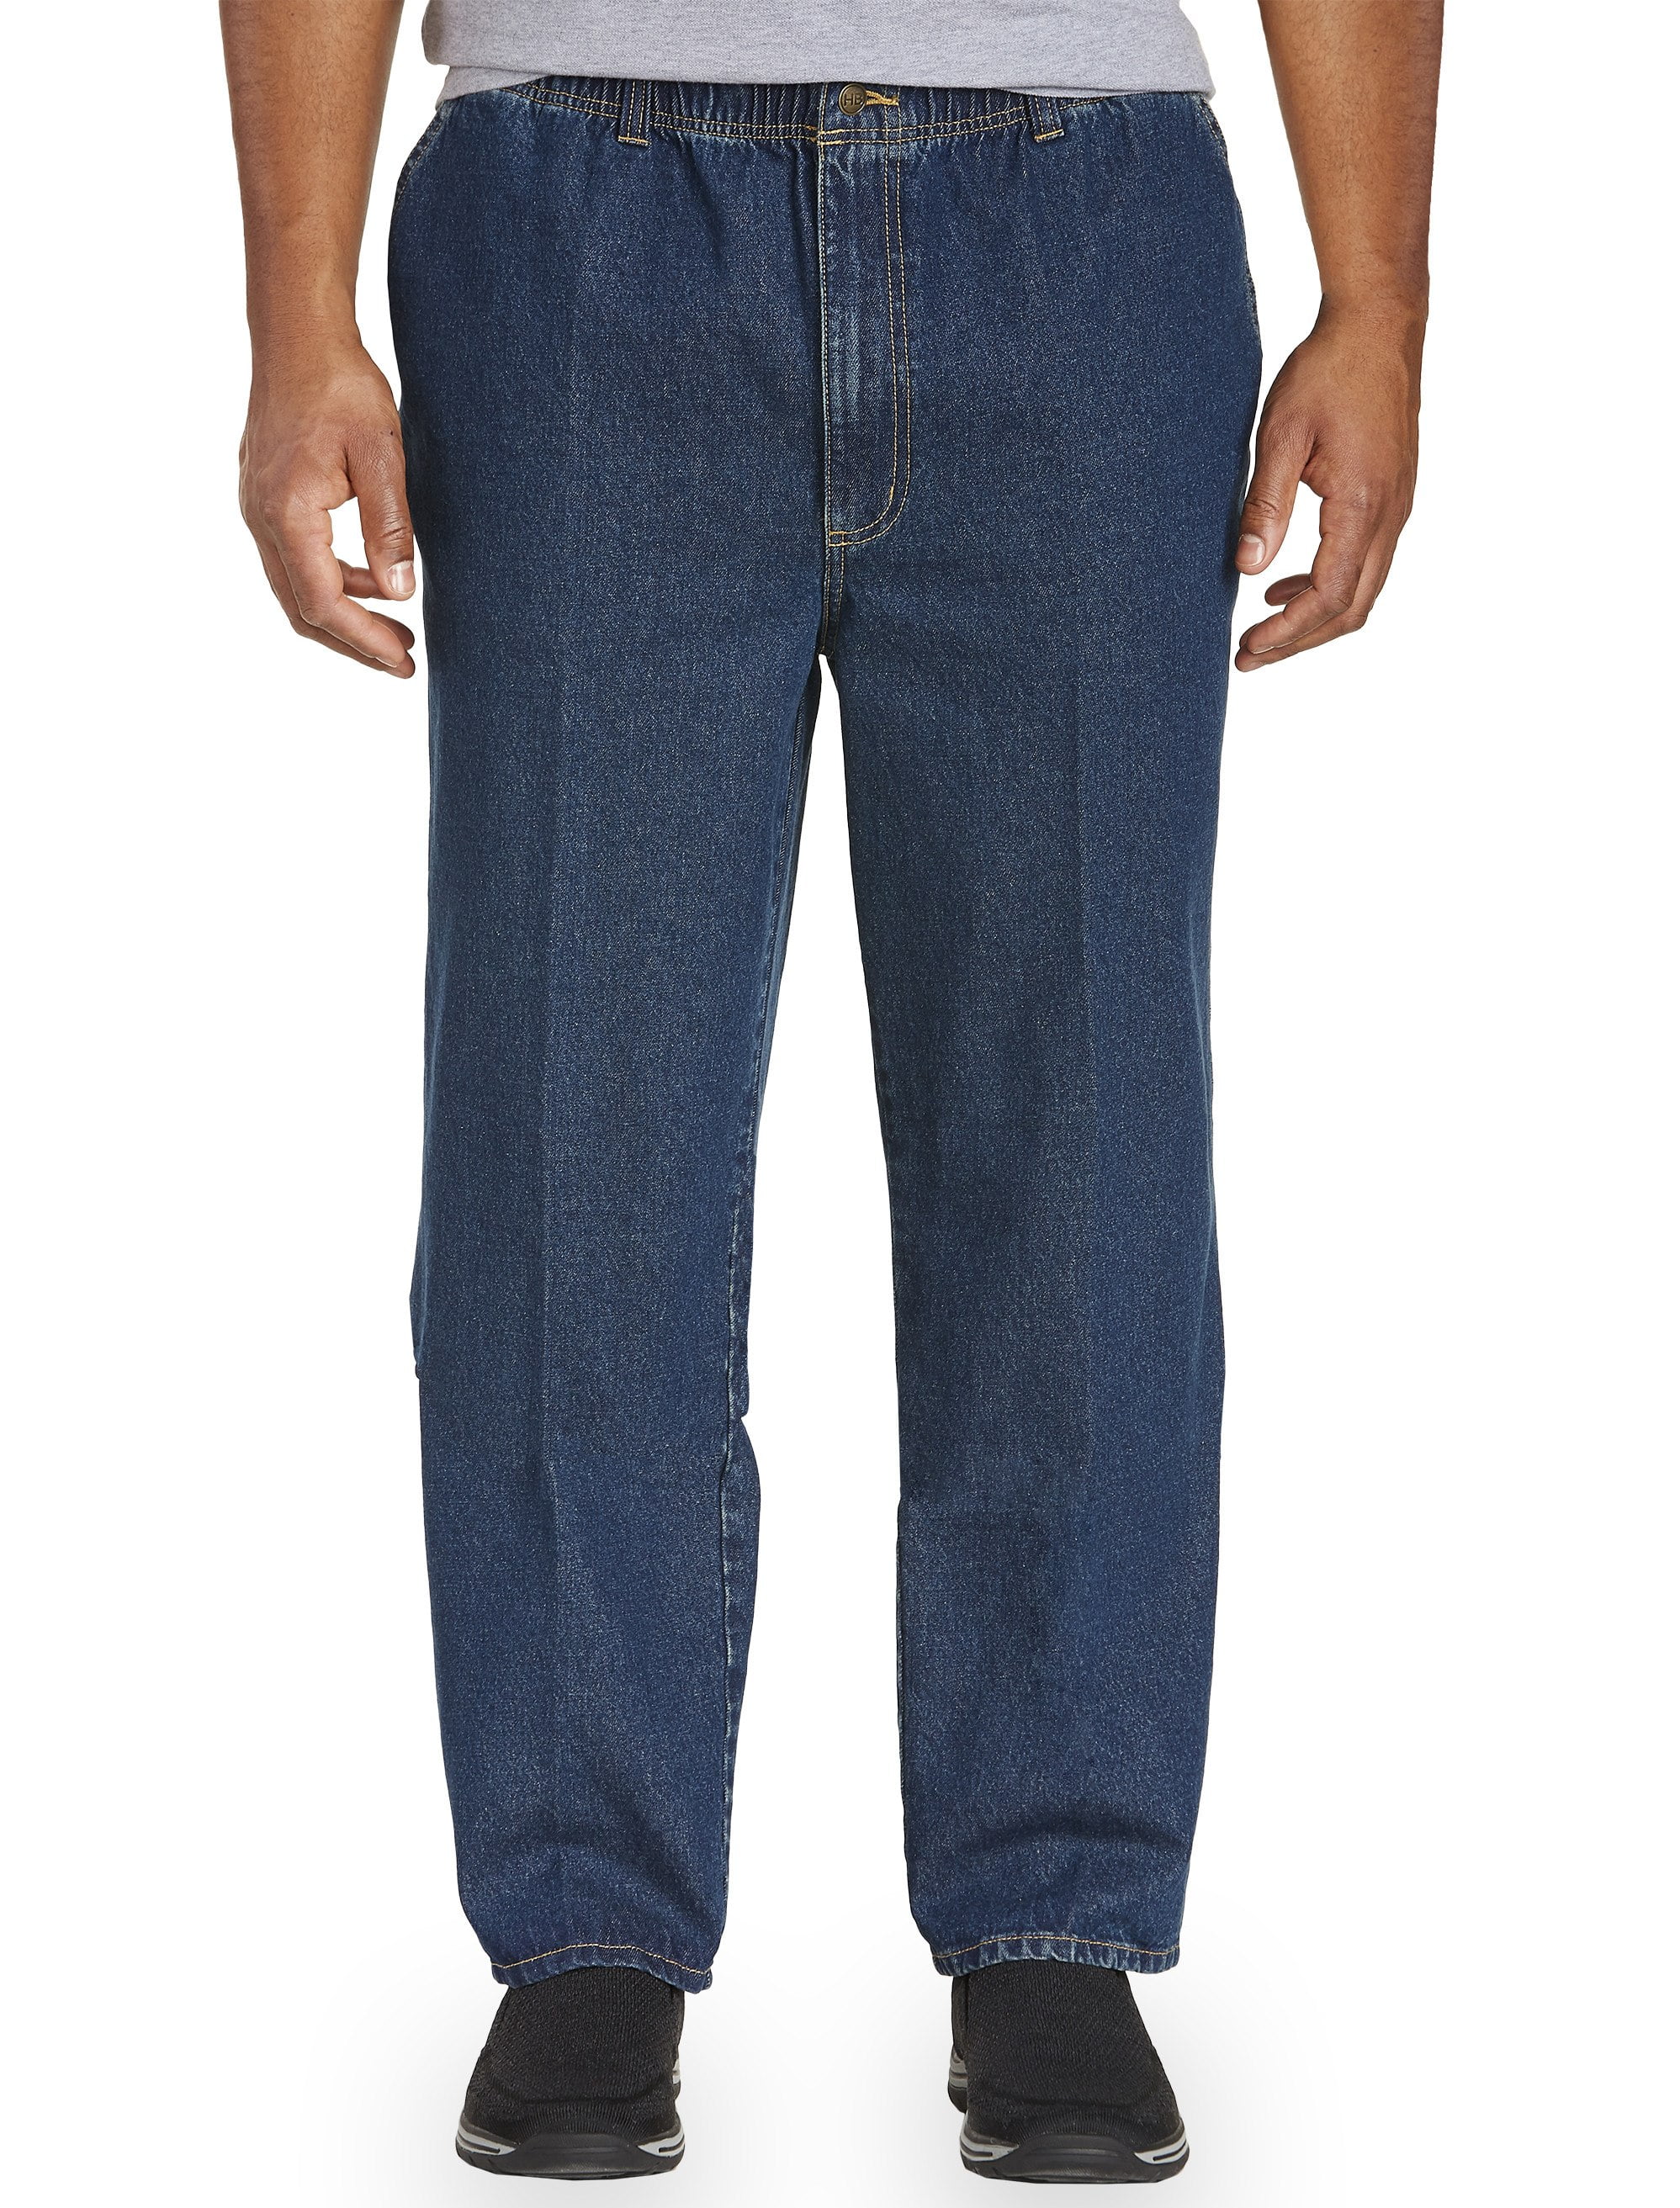 Levi's Men's Big & Tall 501 Original Shrink-to-Fit Jeans 